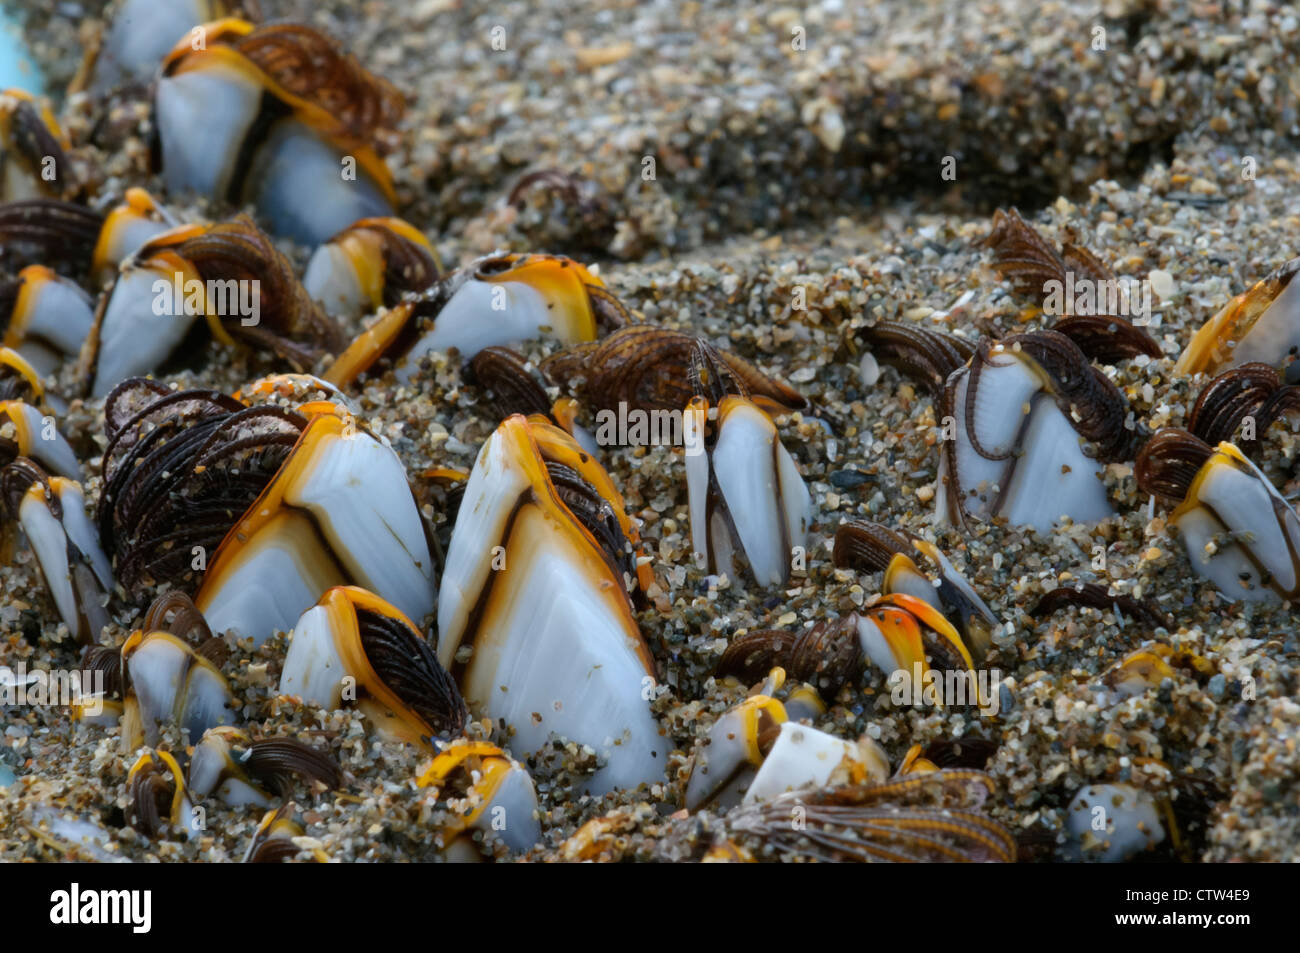 Percebes (Lepas antifera) encontrado en Driftwood en una playa de Las Islas Shetland. La isla de Unst, Shetland Isles. De junio. Foto de stock